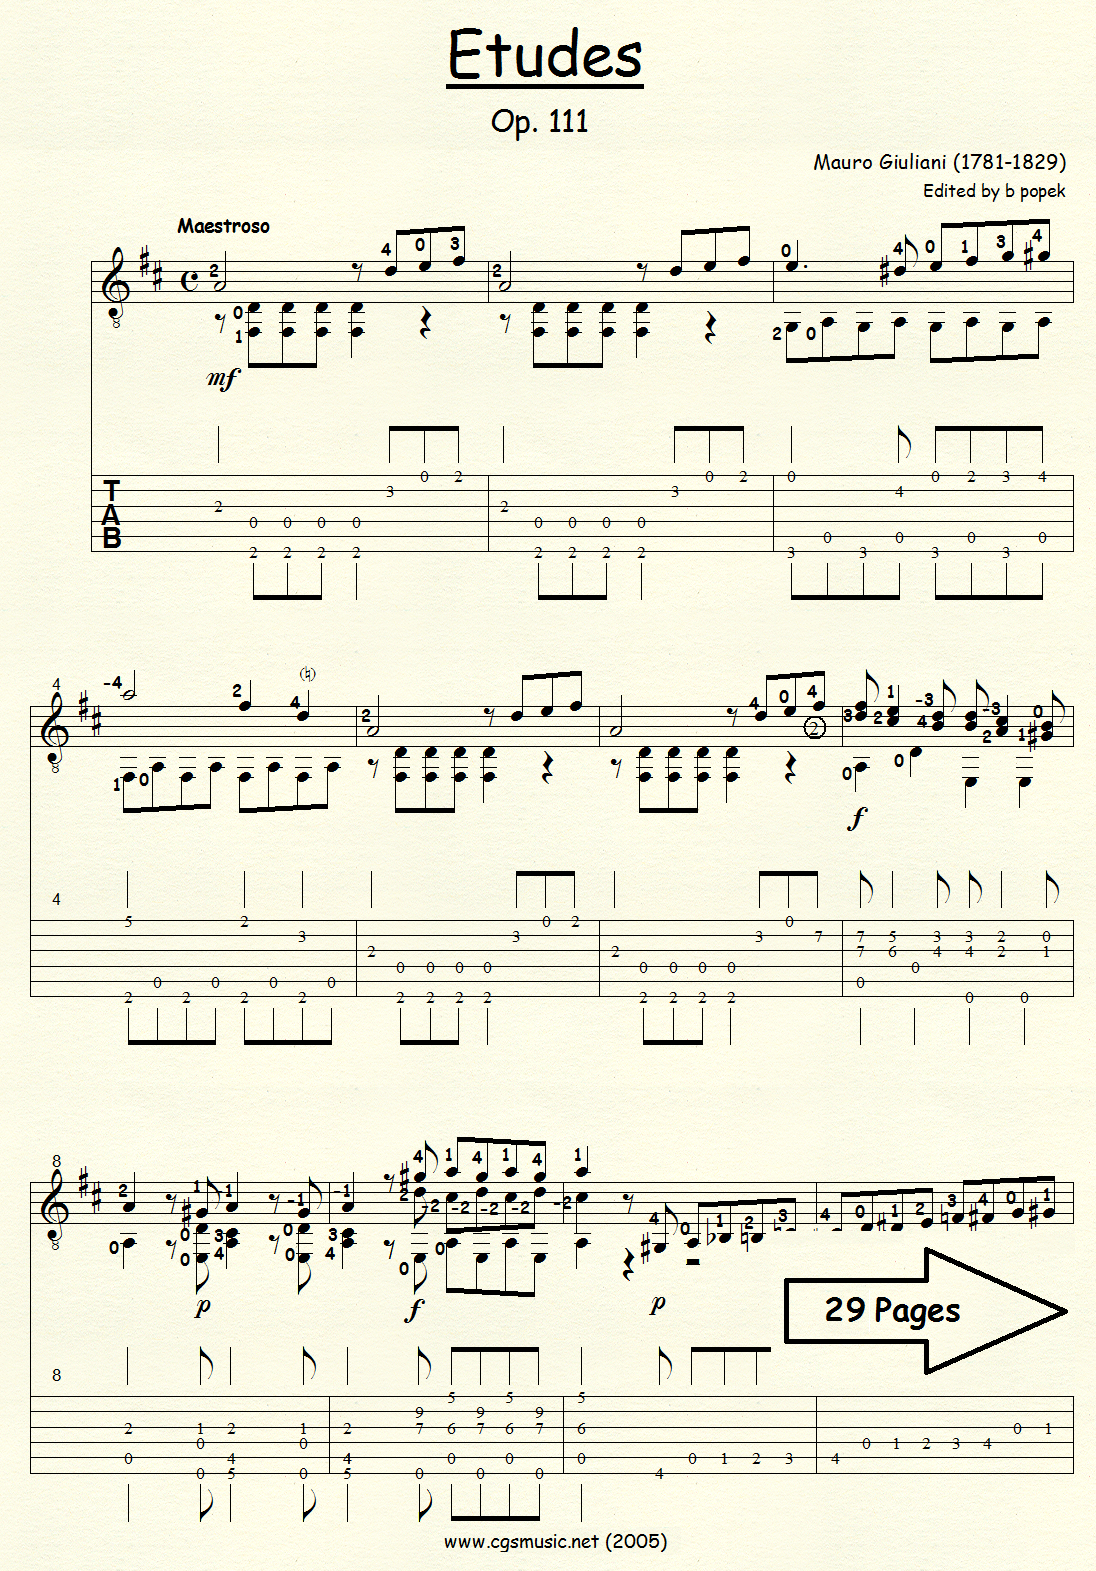 Etudes Op 111 (Giuliani) for Classical Guitar in Tablature